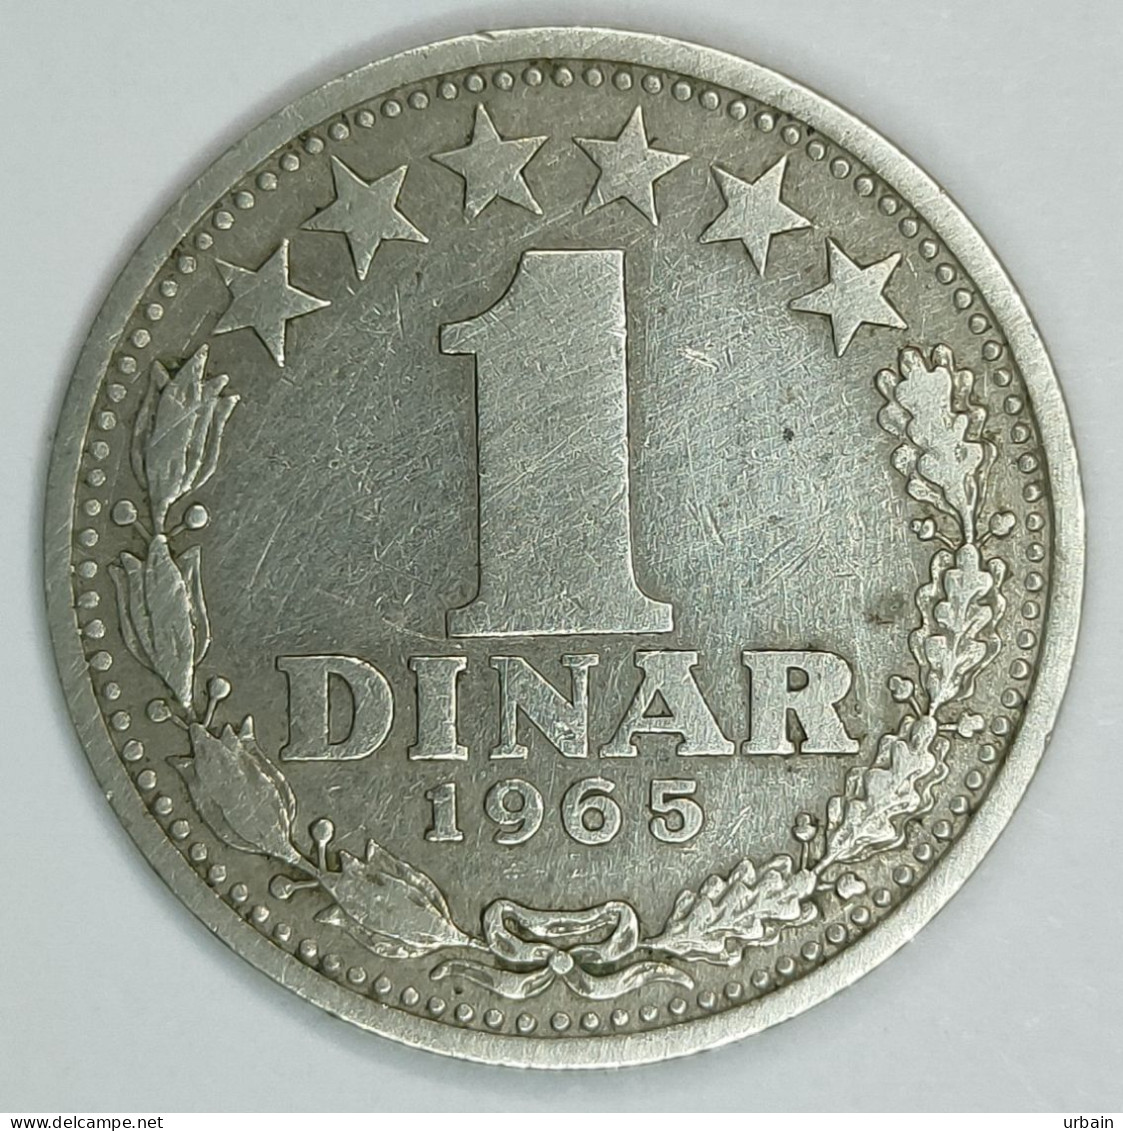 Lot 5 coins - YUGOSLAVIA - from 1955 to 1977 - Socialist Yugoslavia